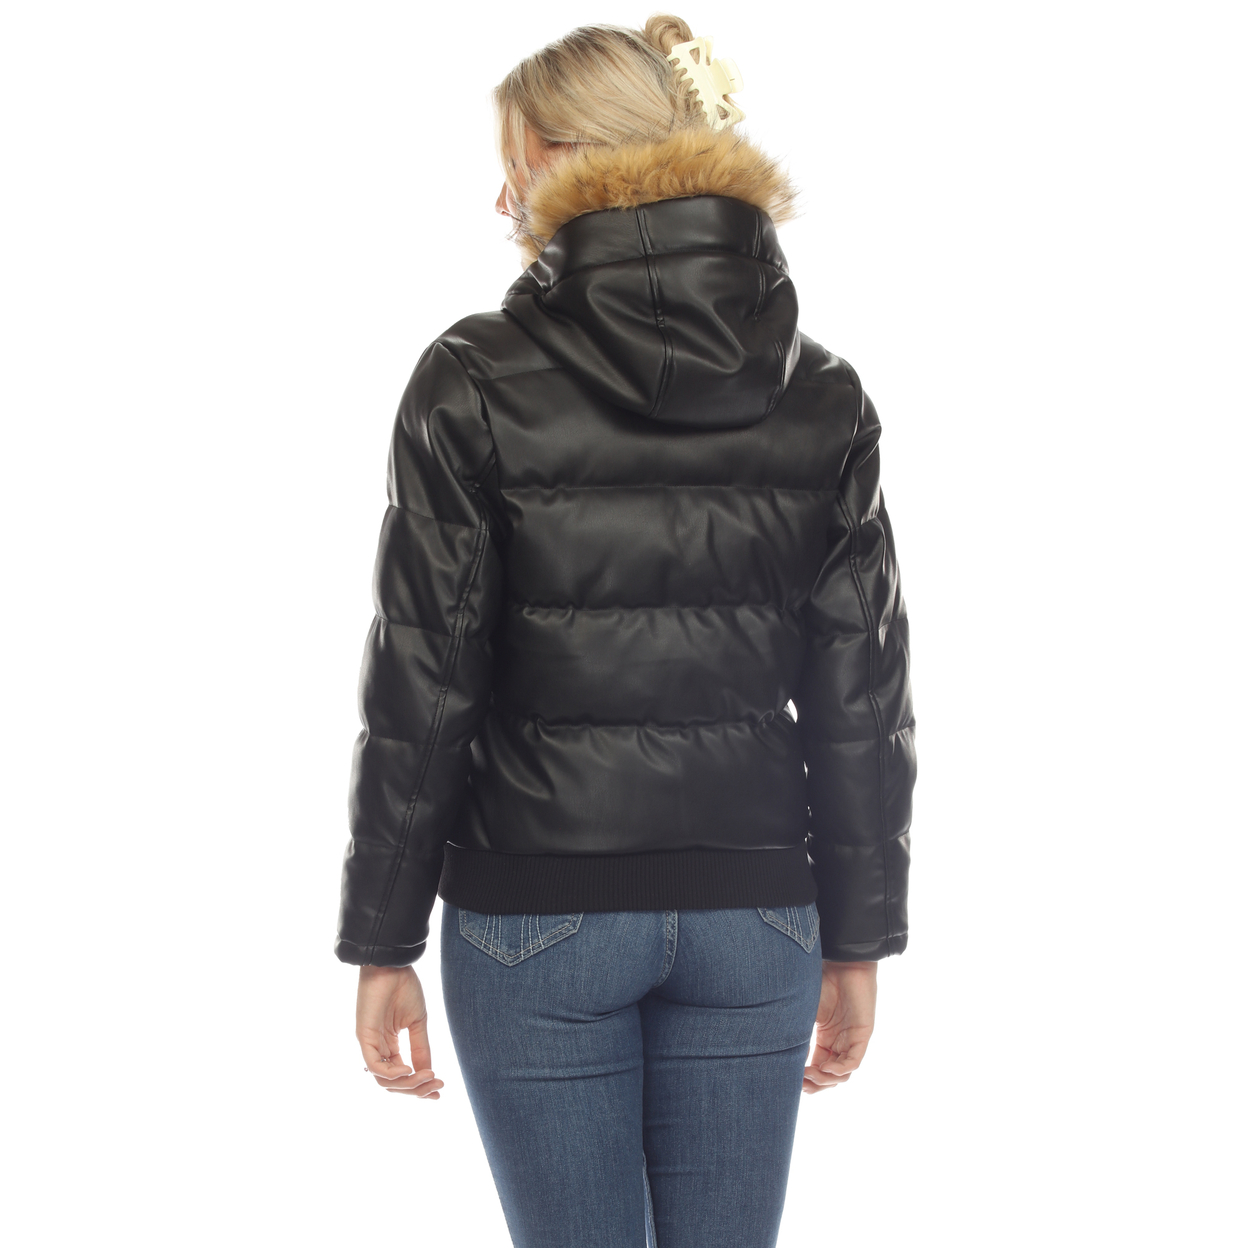 White Mark Women's Removable Fur Hoodie PU Leather Puffer Jacket - Black, Medium